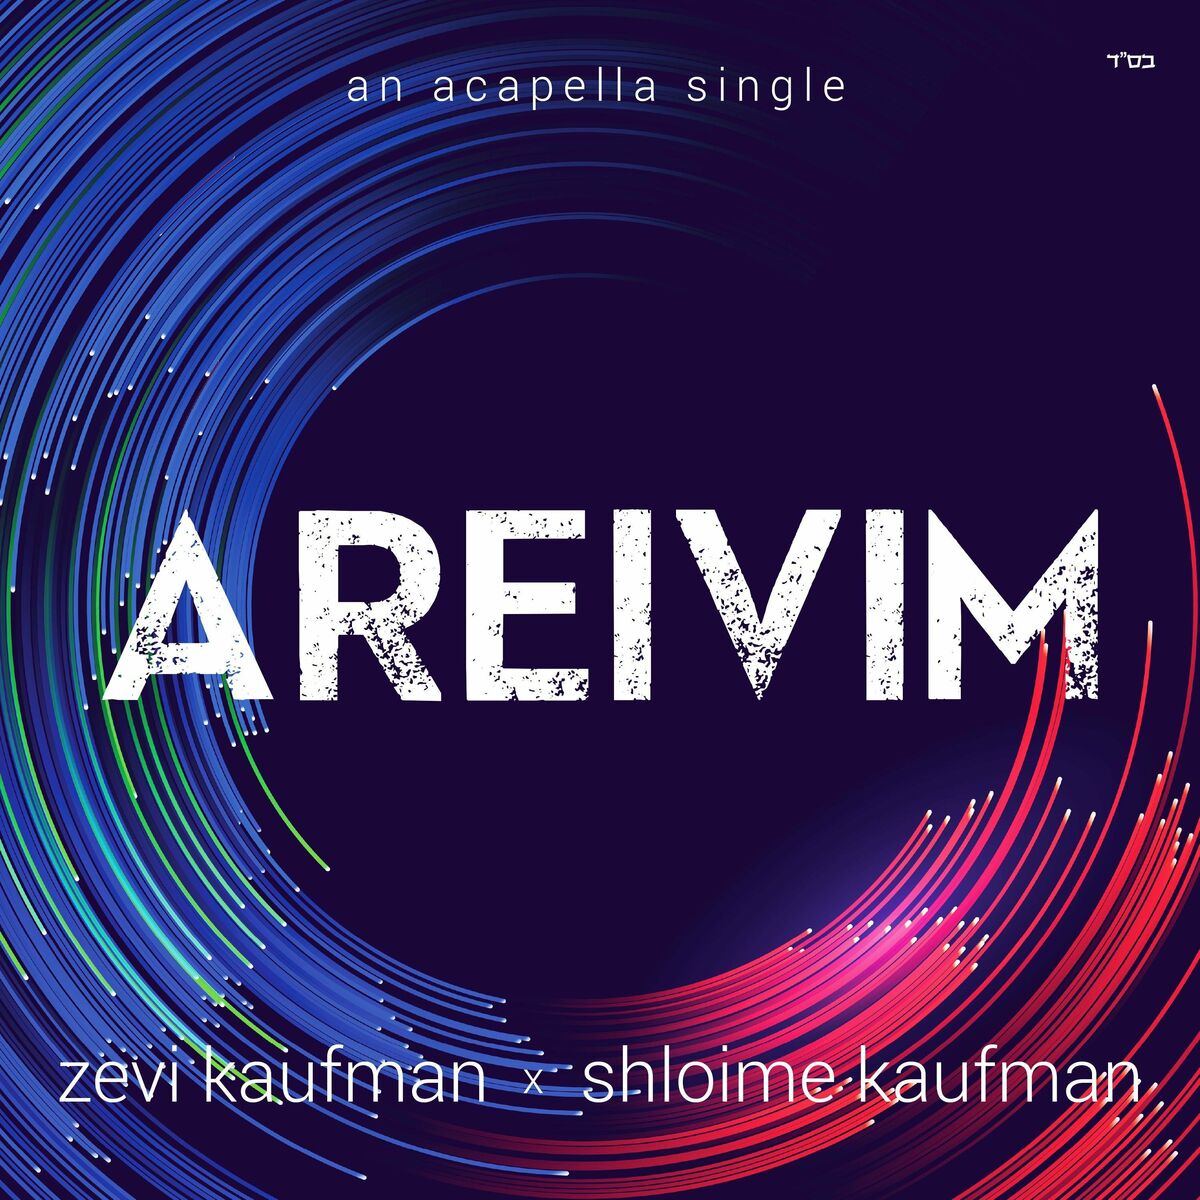 Zevi Kaufman & Shloime Kaufman - Areivim [Acapella] (Single)